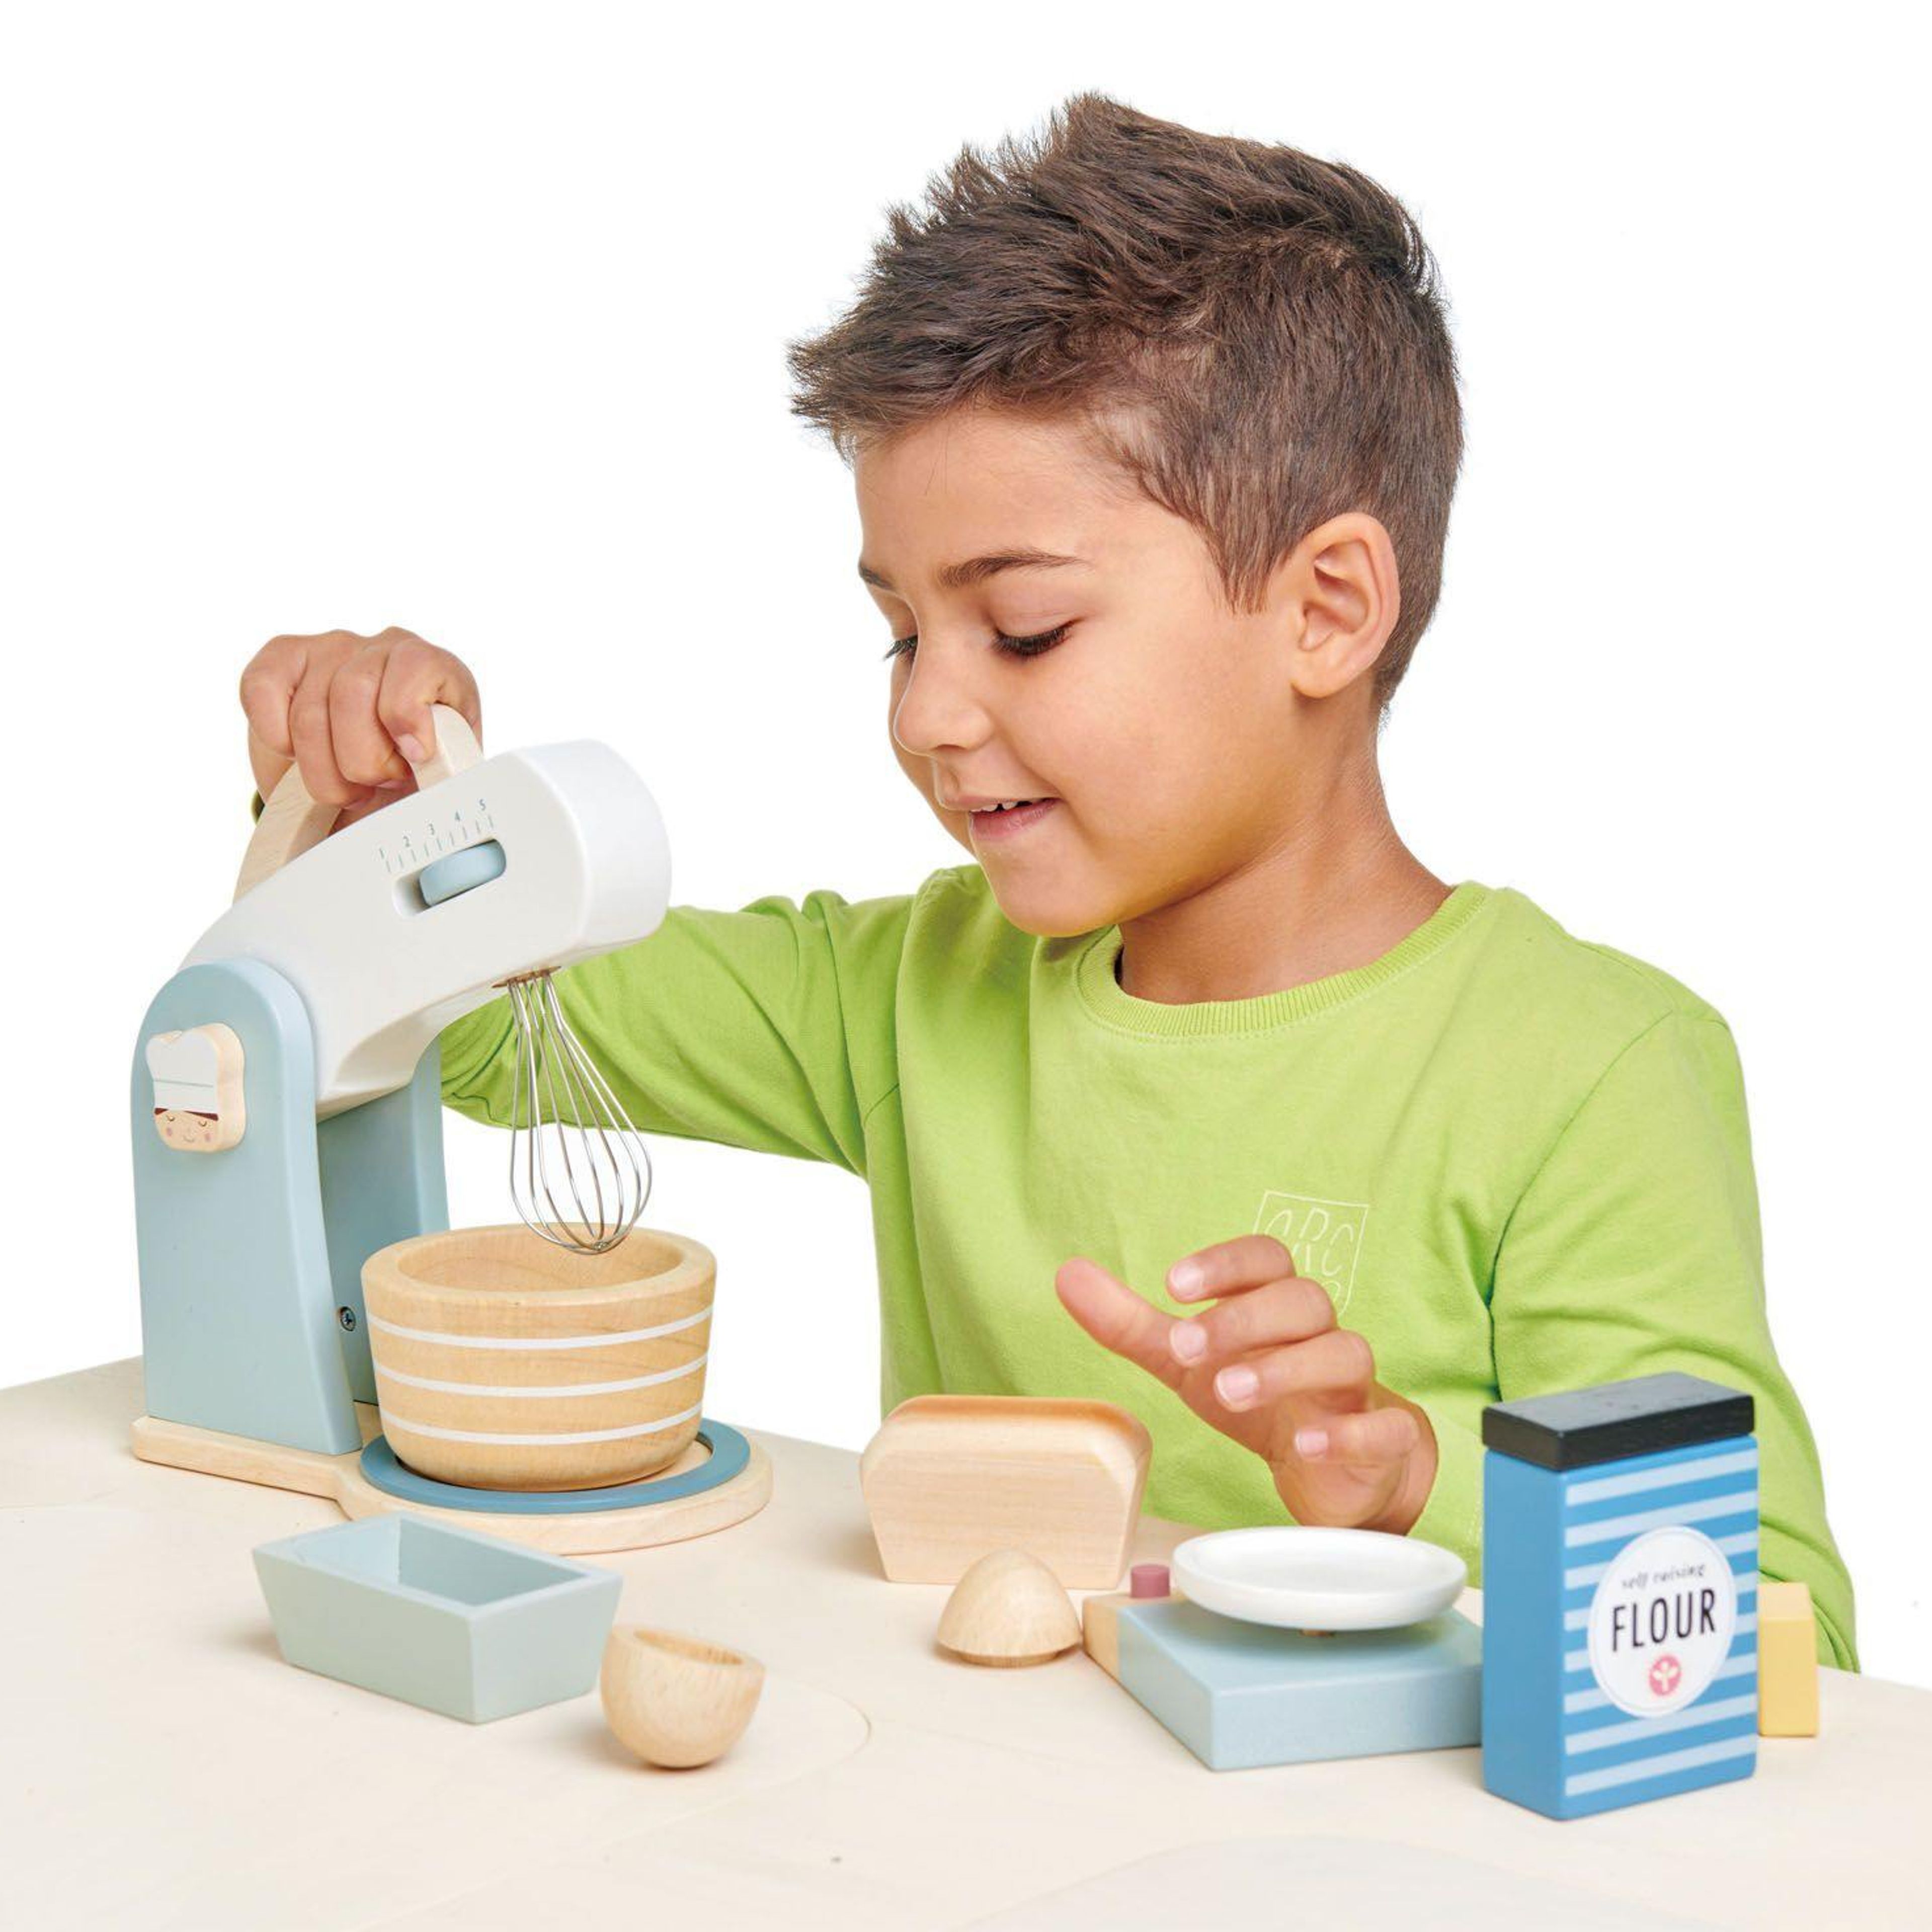 Tender Leaf Toys Baking & Mixer Toy Set